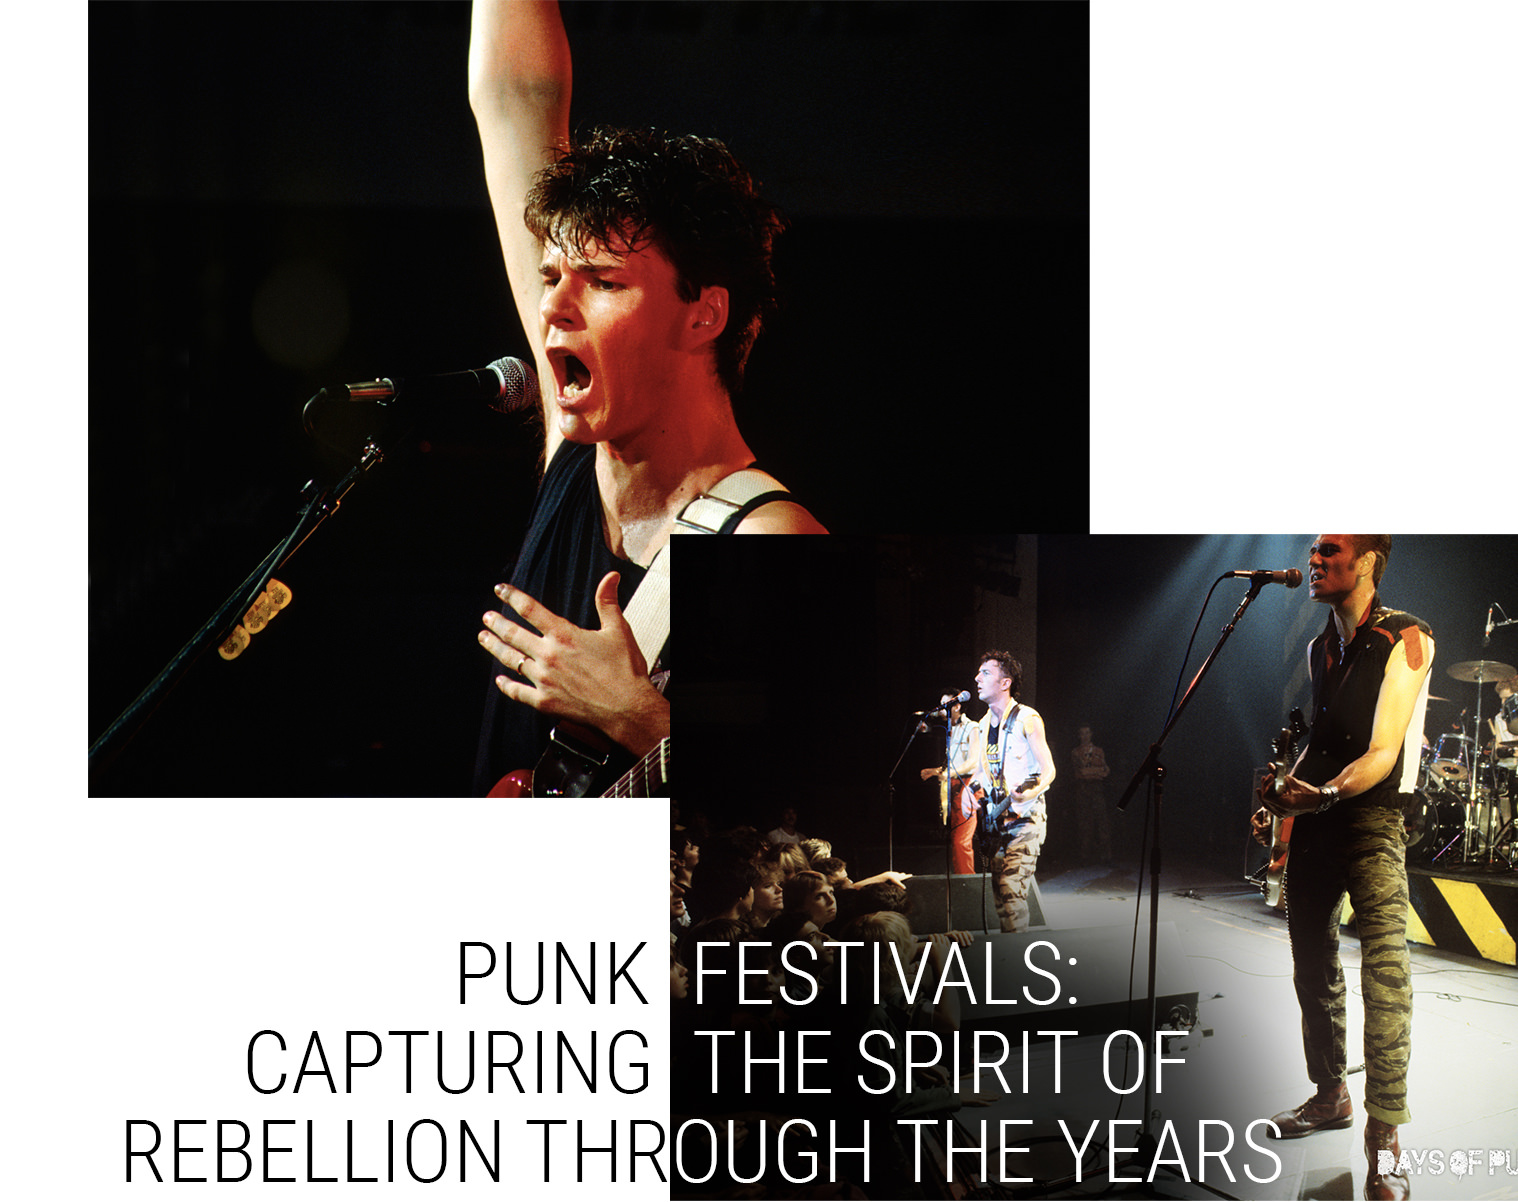 Punk-Festivals-Capturing-the-Spirit-of-Rebellion-Through-the-Years-Header-3.jpg